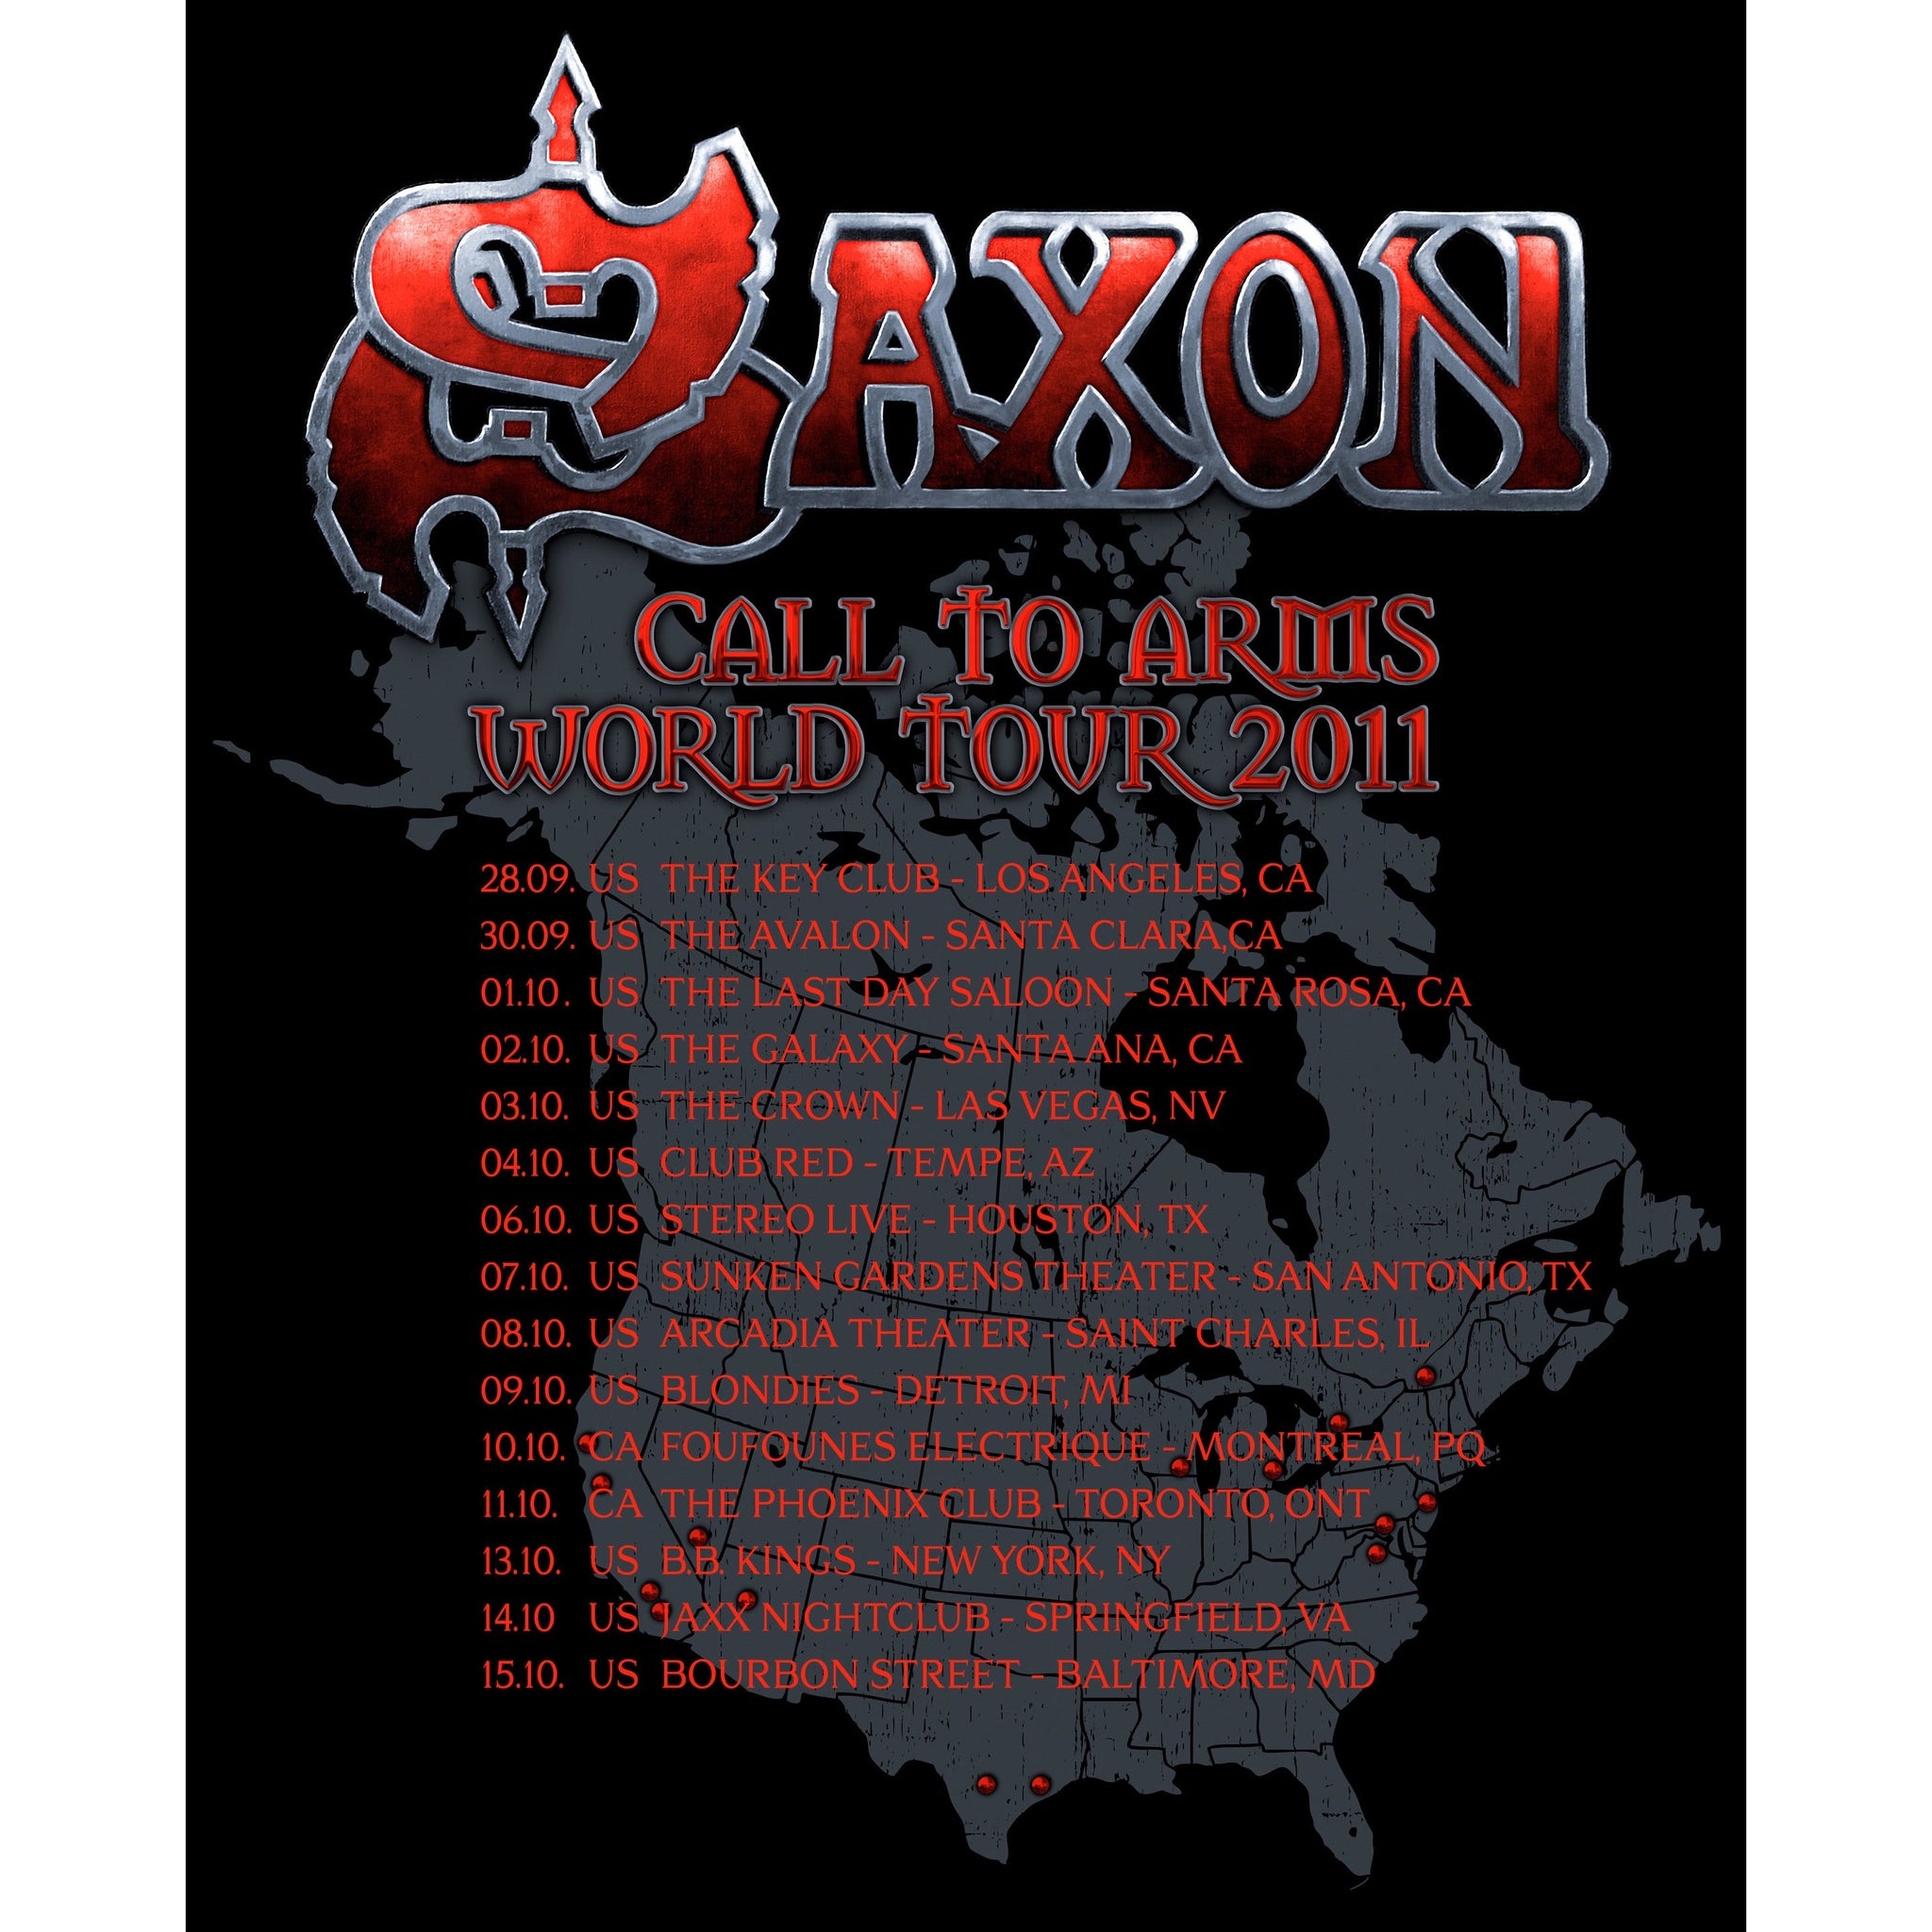 Saxon - Heavy Metal Thunder - USA T-Shirt